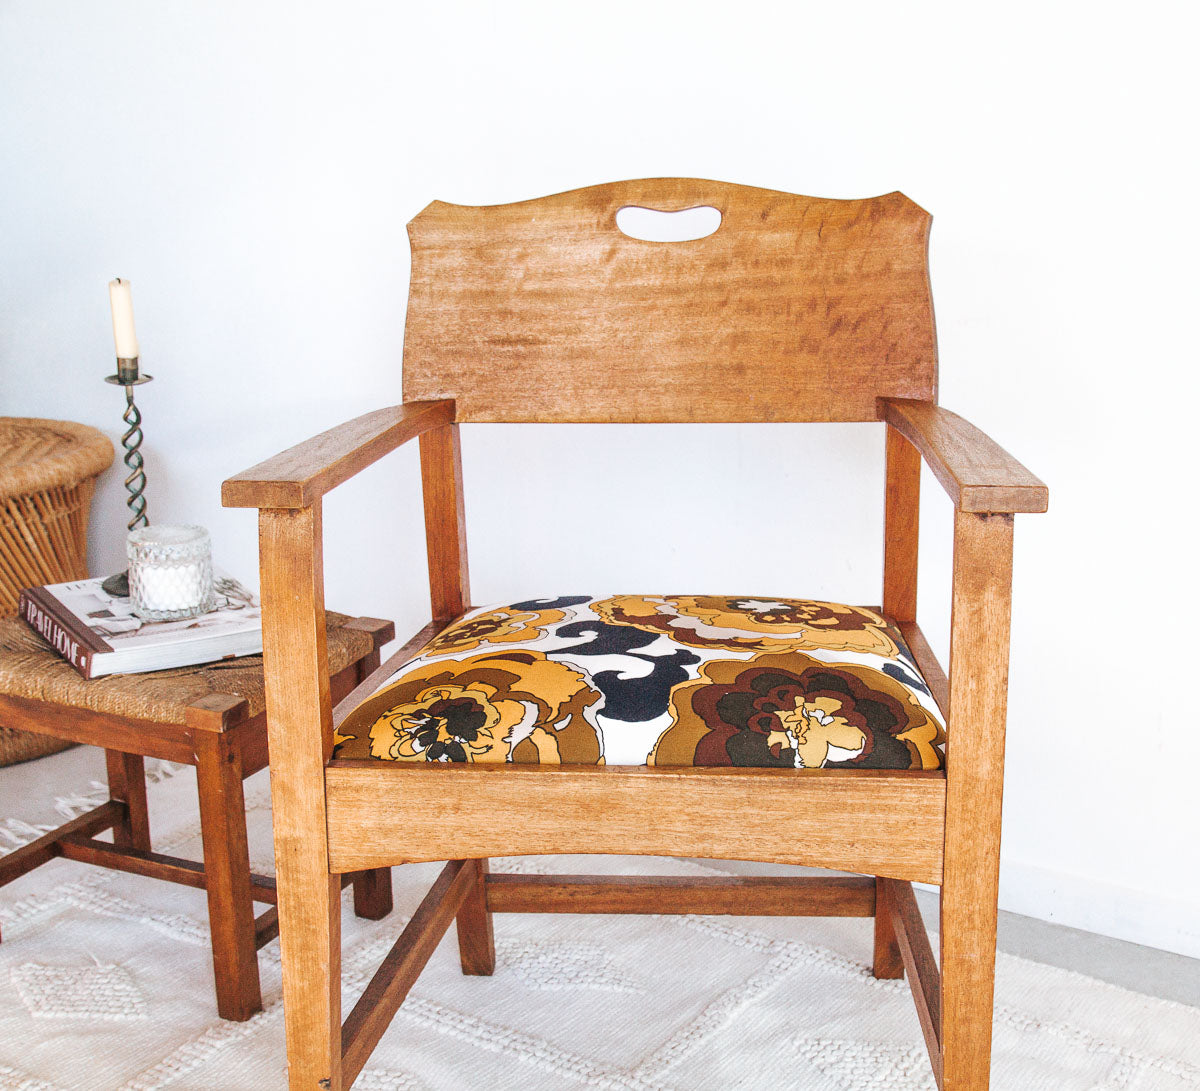 boho furniture retro vintage chair with retro floral patterned upholstery blonde oak frame